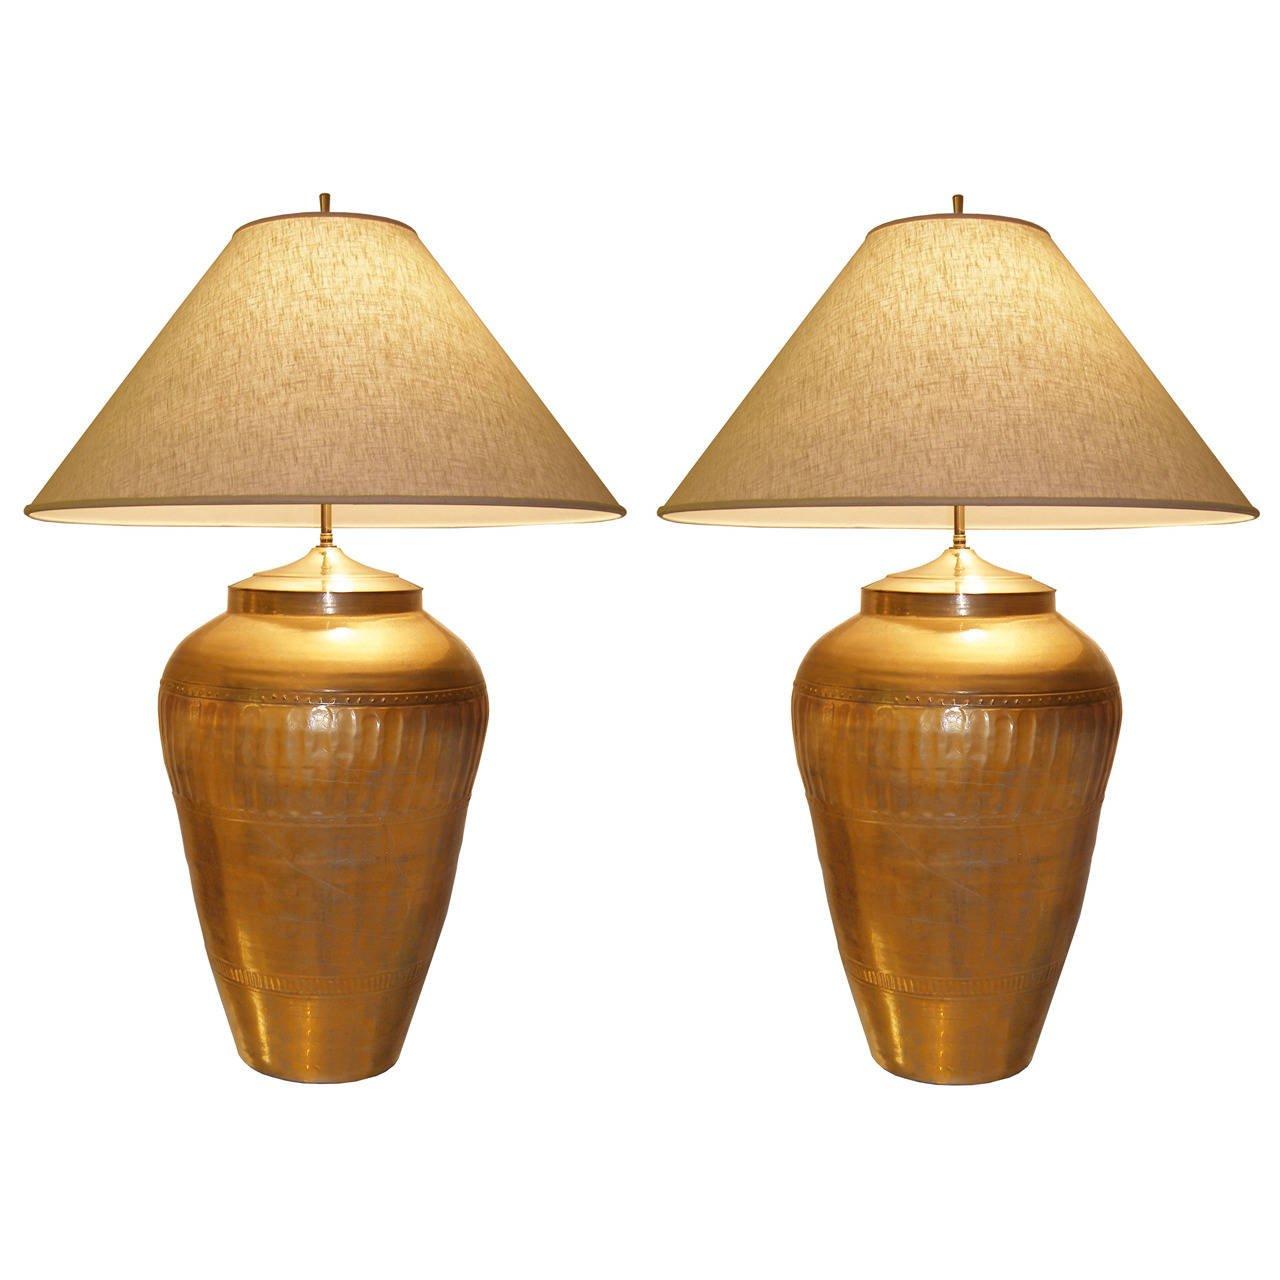 20th Century Pair of Large Italian Ceramic Metallic Gold Lamps with Light Craquelure Finish For Sale